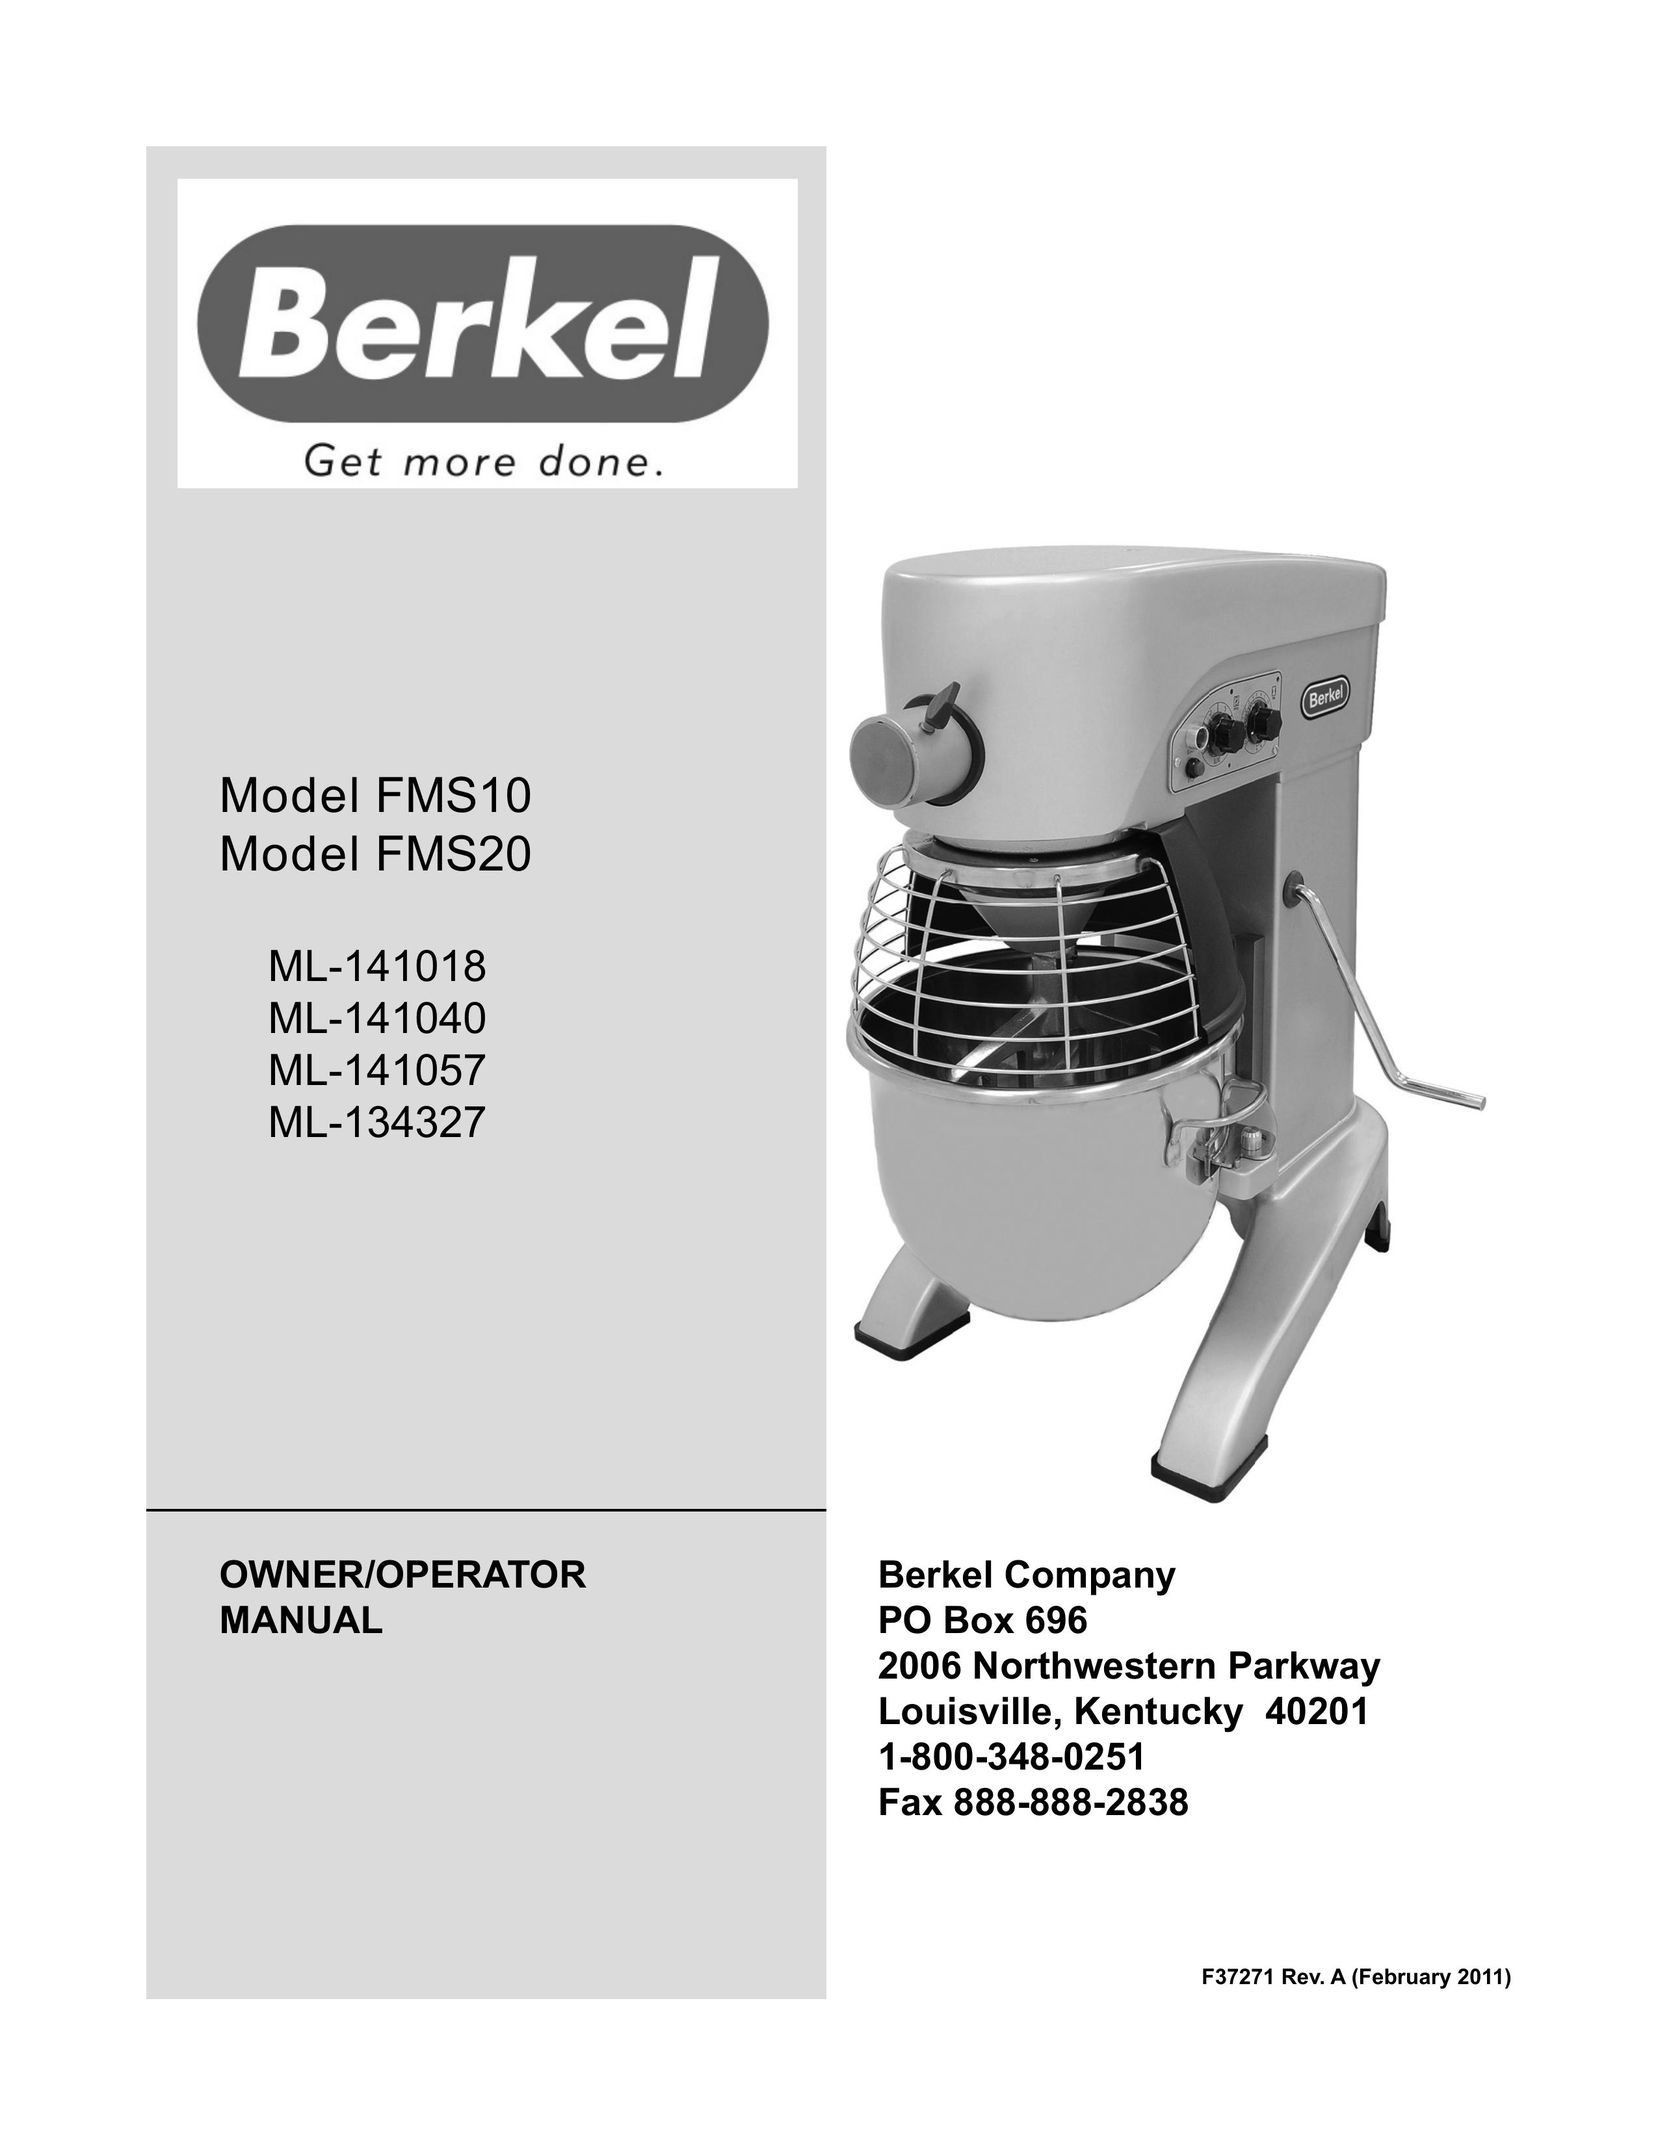 Berkel ML-141040 Mixer User Manual